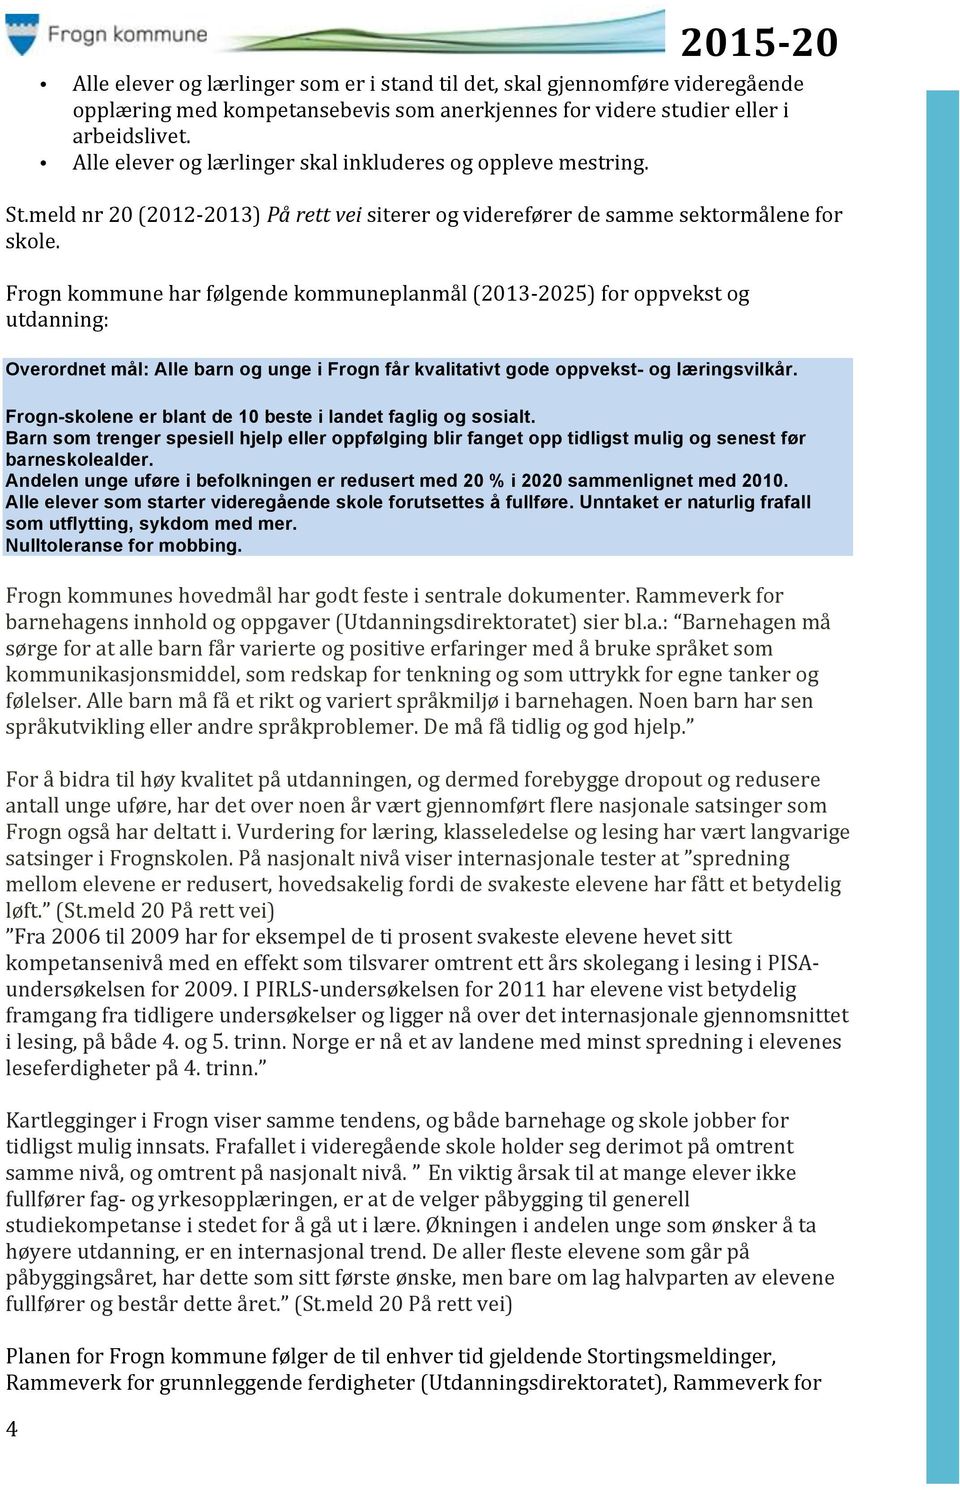 Frogn kommune har følgende kommuneplanmål (2013-2025) for oppvekst og utdanning: Overordnet mål: Alle barn og unge i Frogn får kvalitativt gode oppvekst- og læringsvilkår.